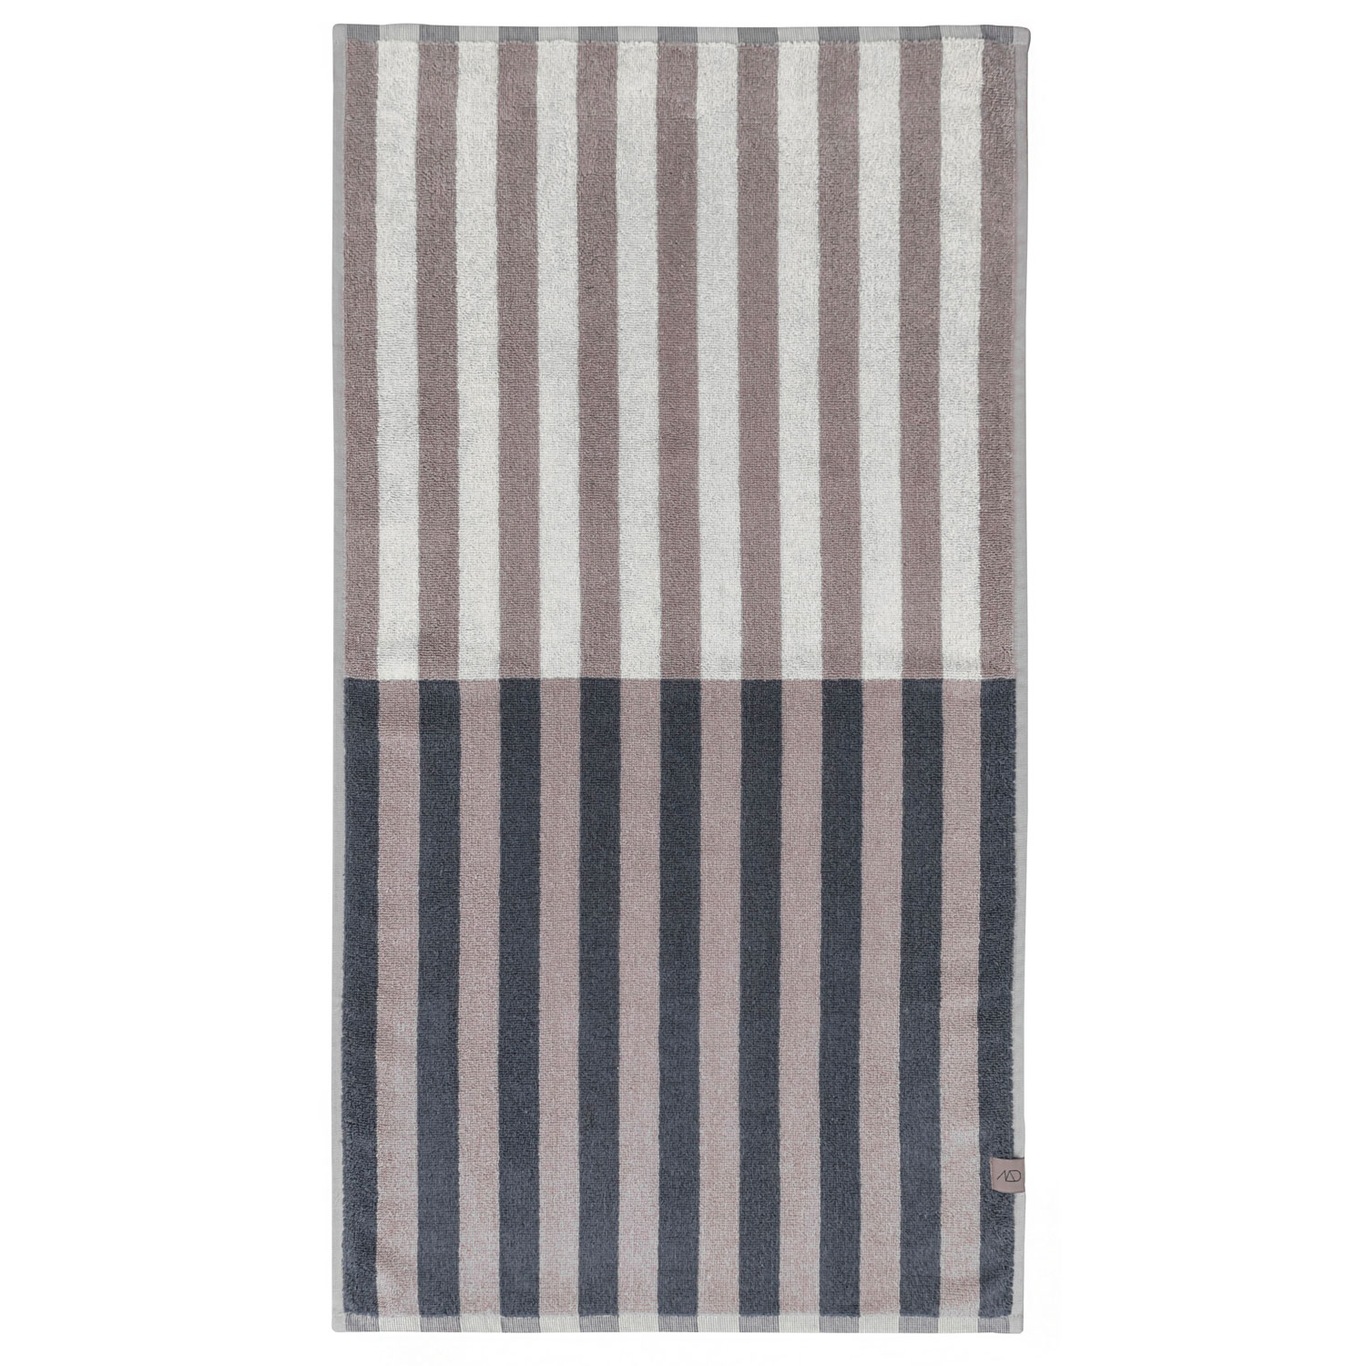 Disorder Towel 40x55 cm, Off-white